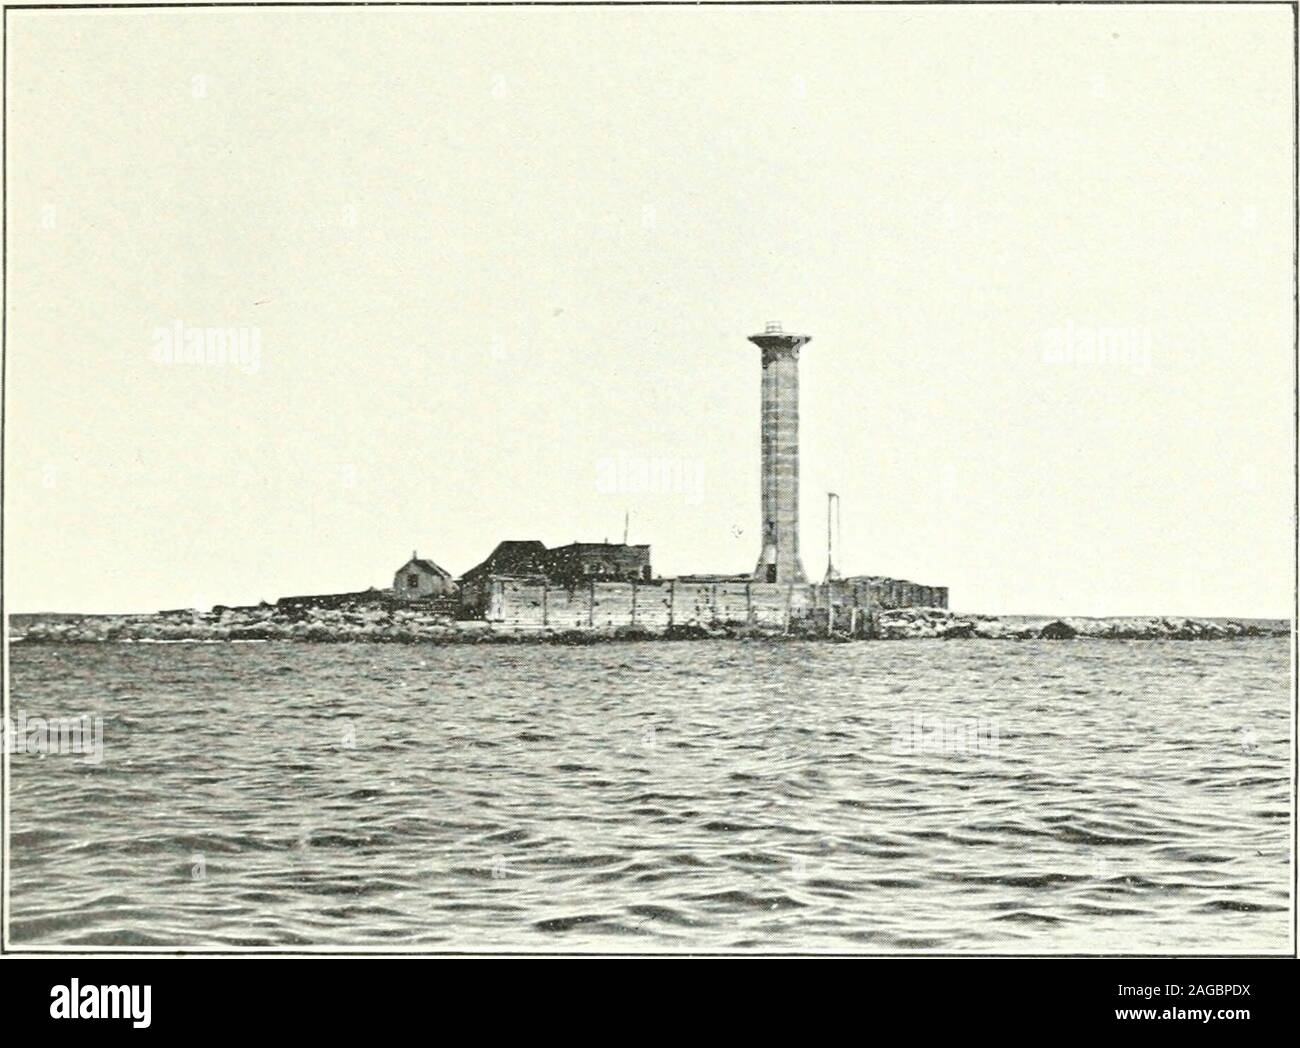 . Sessional papers of the Dominion of Canada 1909. [Uv Ai-c-tic 111  niter t^Miarters, AIImtI Hailniur, Idiuls Inlrt, I.Mii;. Little Hope Island Station, Showing Concrete Tower. Stock Photo